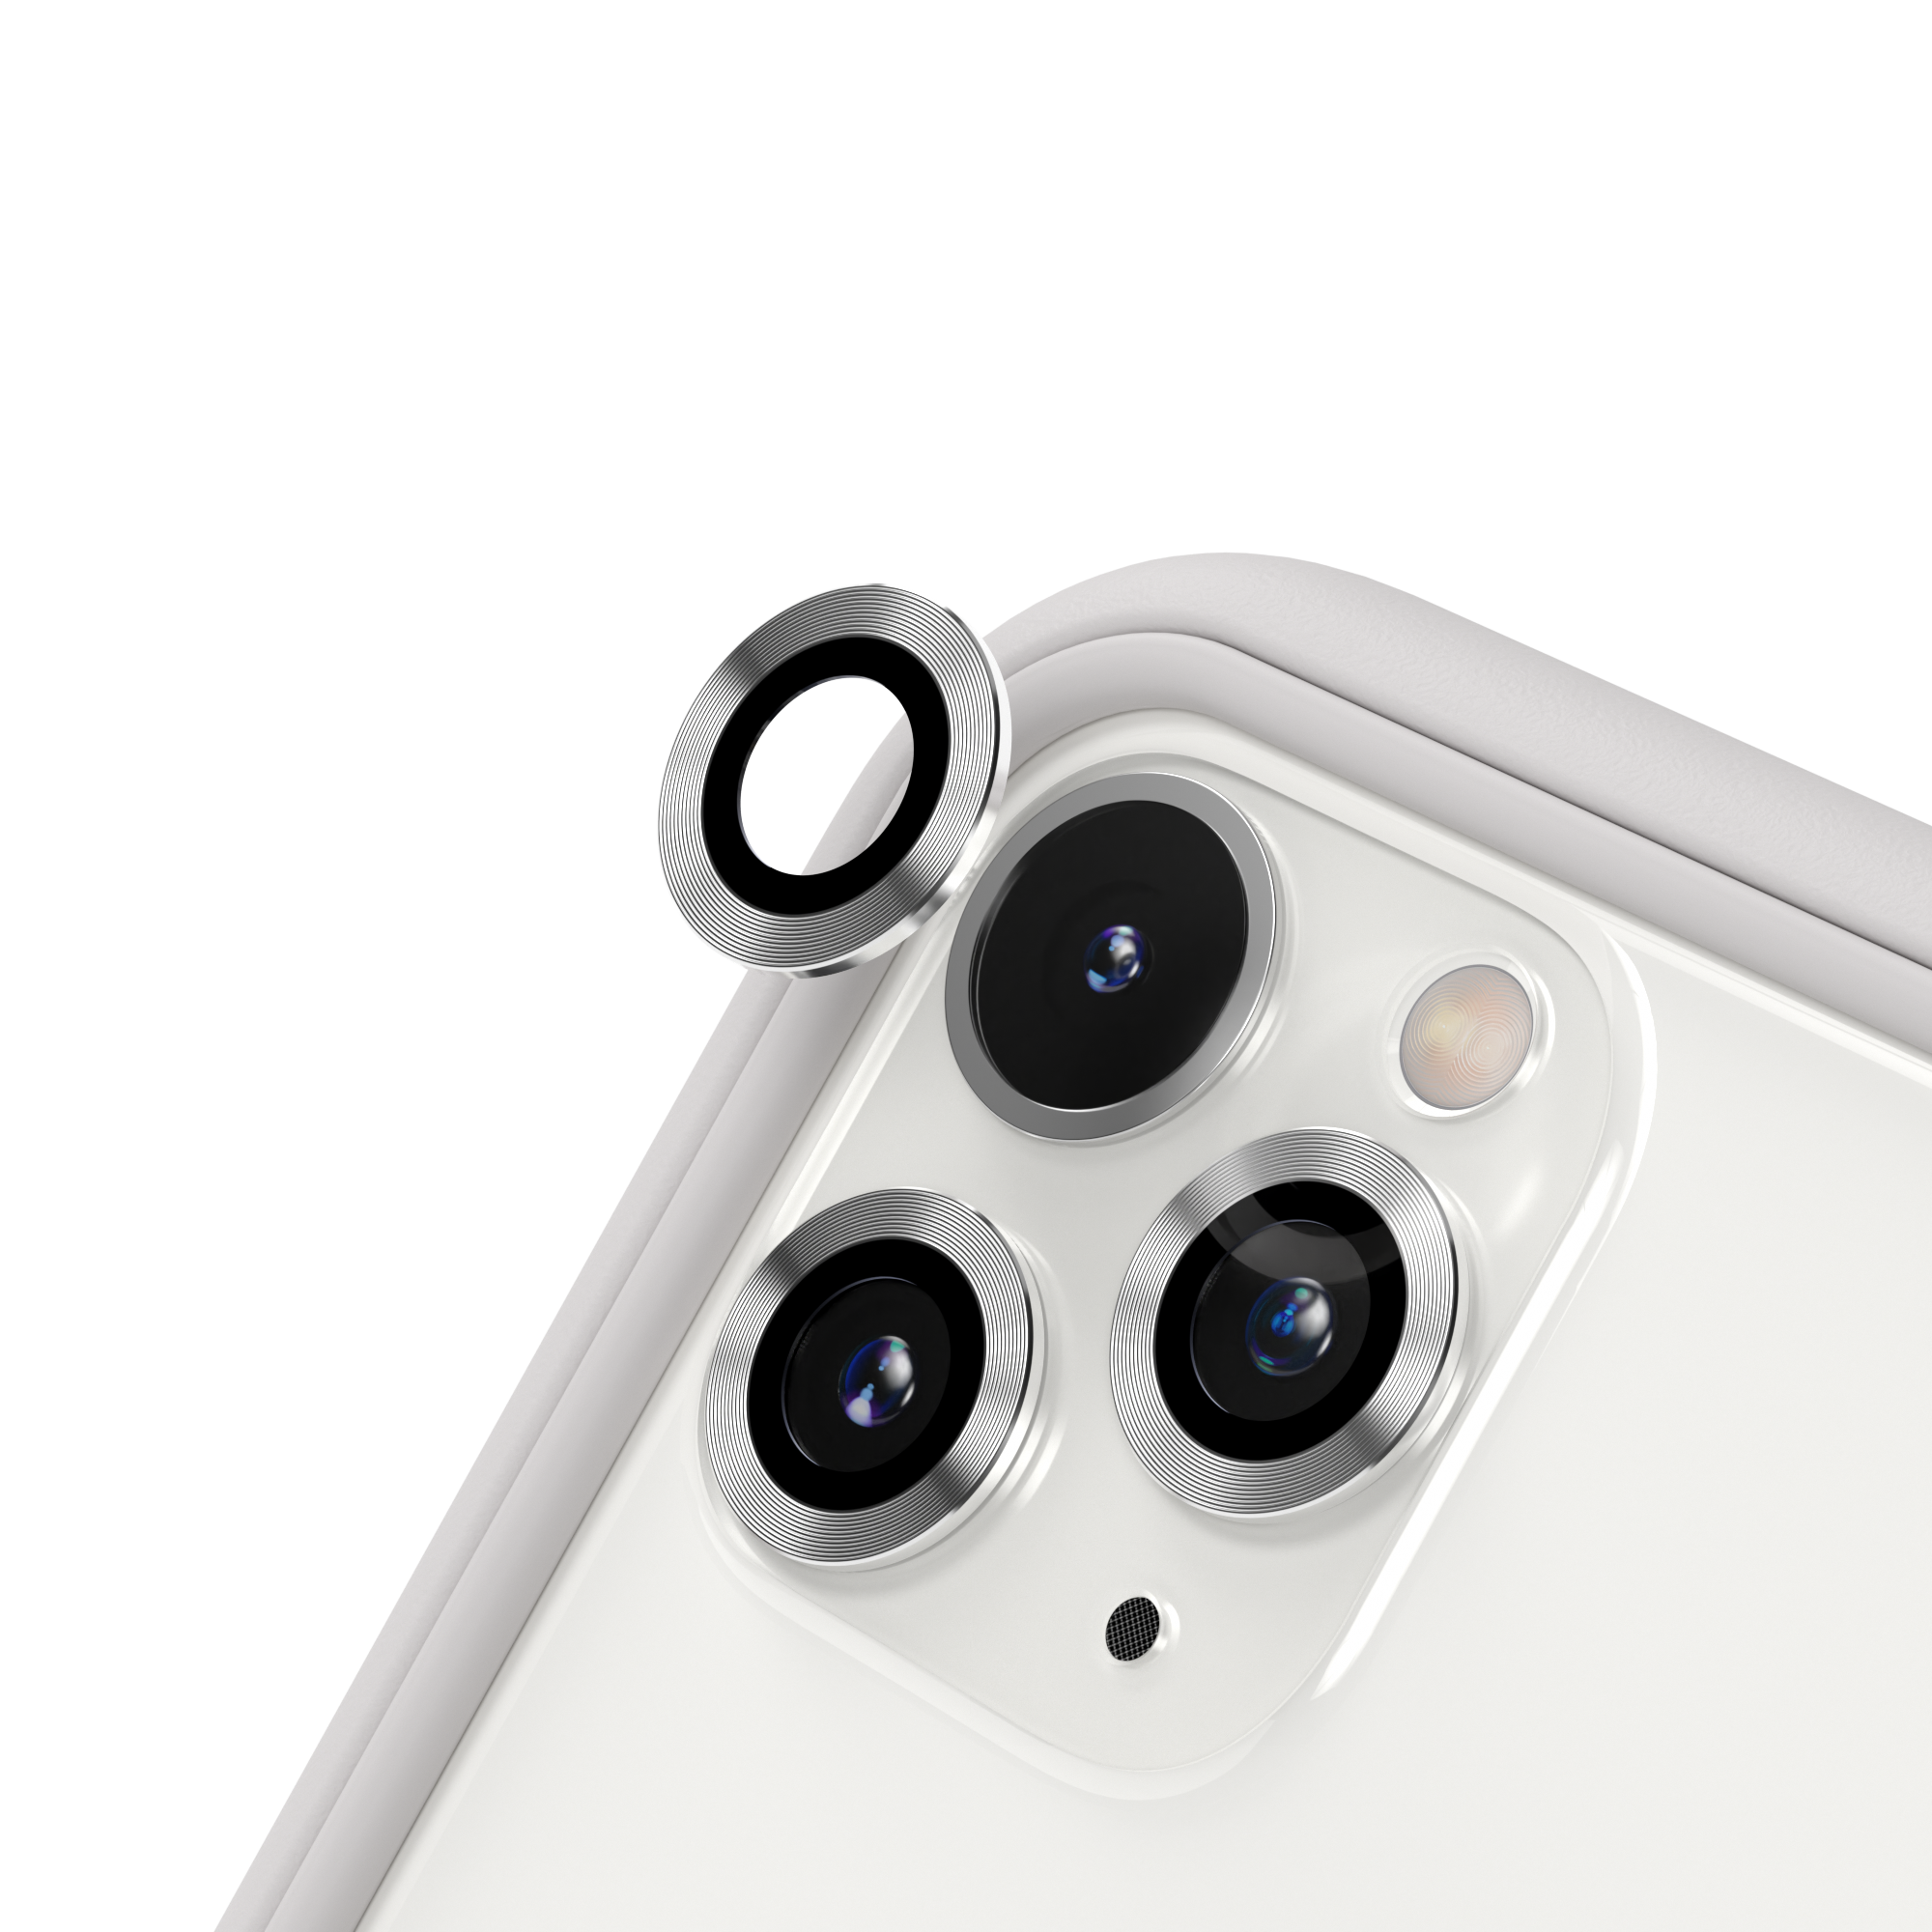  Viền Lens Camera iPhone 11 Promax 9H 